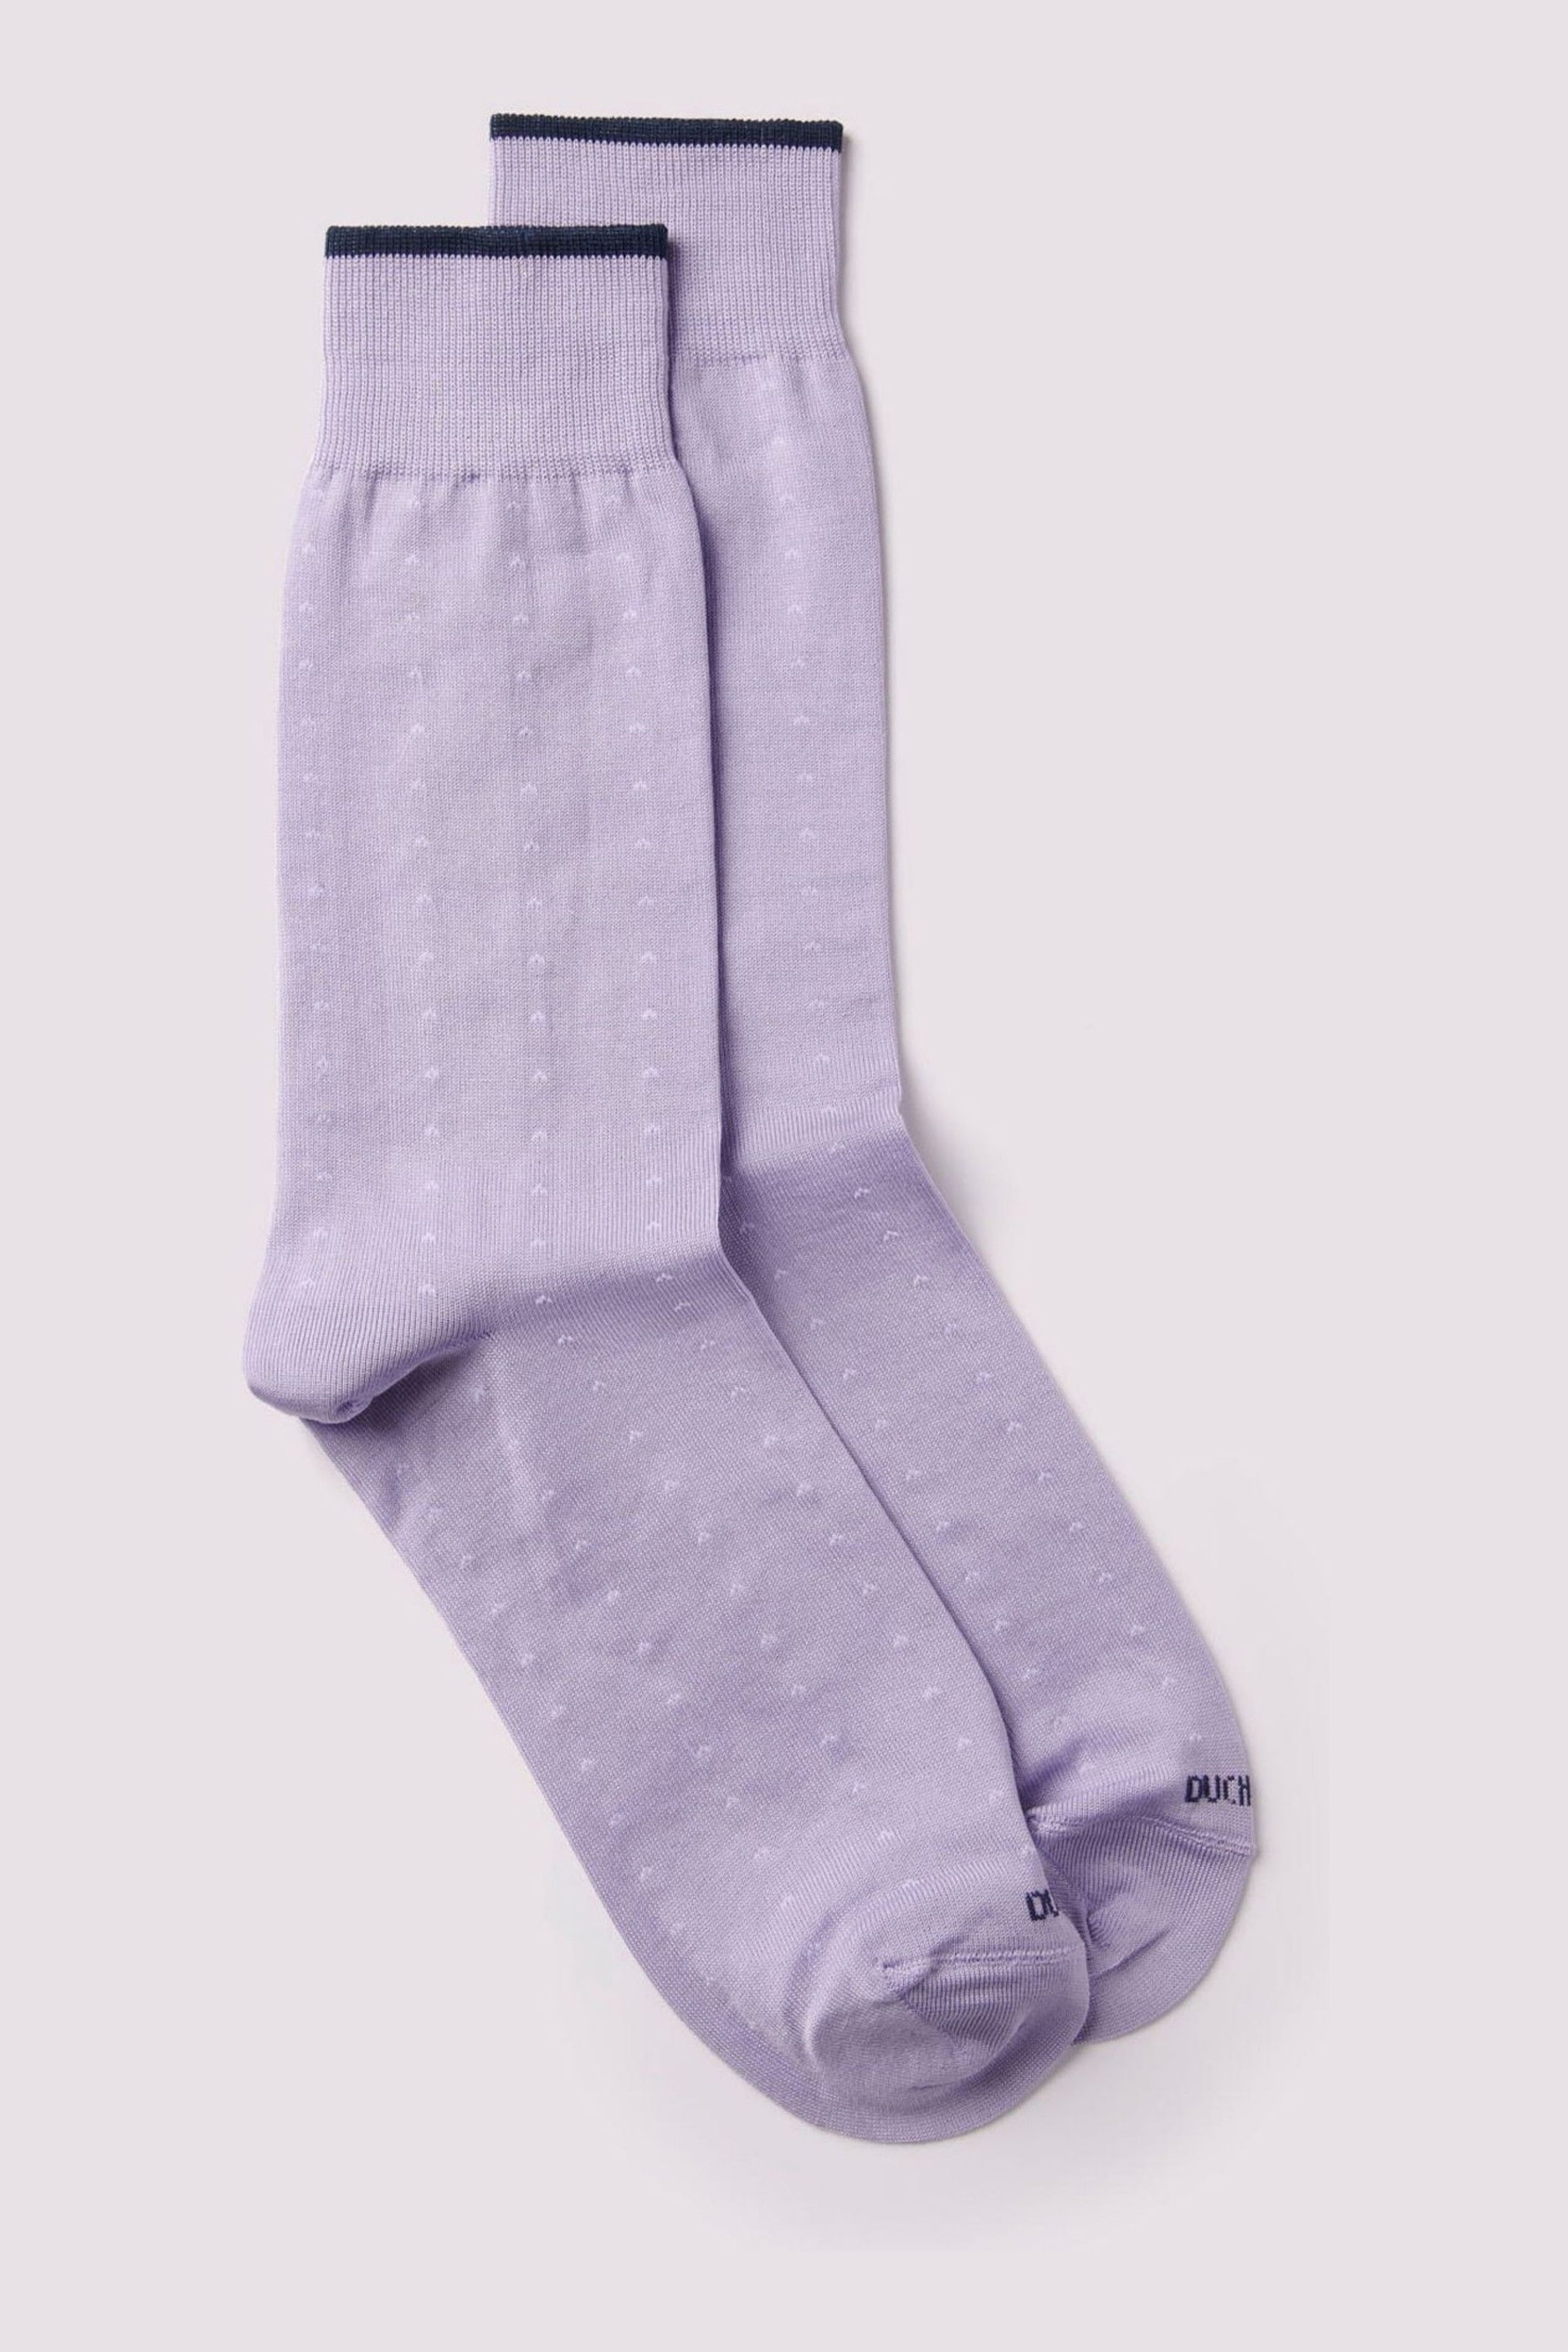 Duchamp Mens Dotted Socks - Image 3 of 3